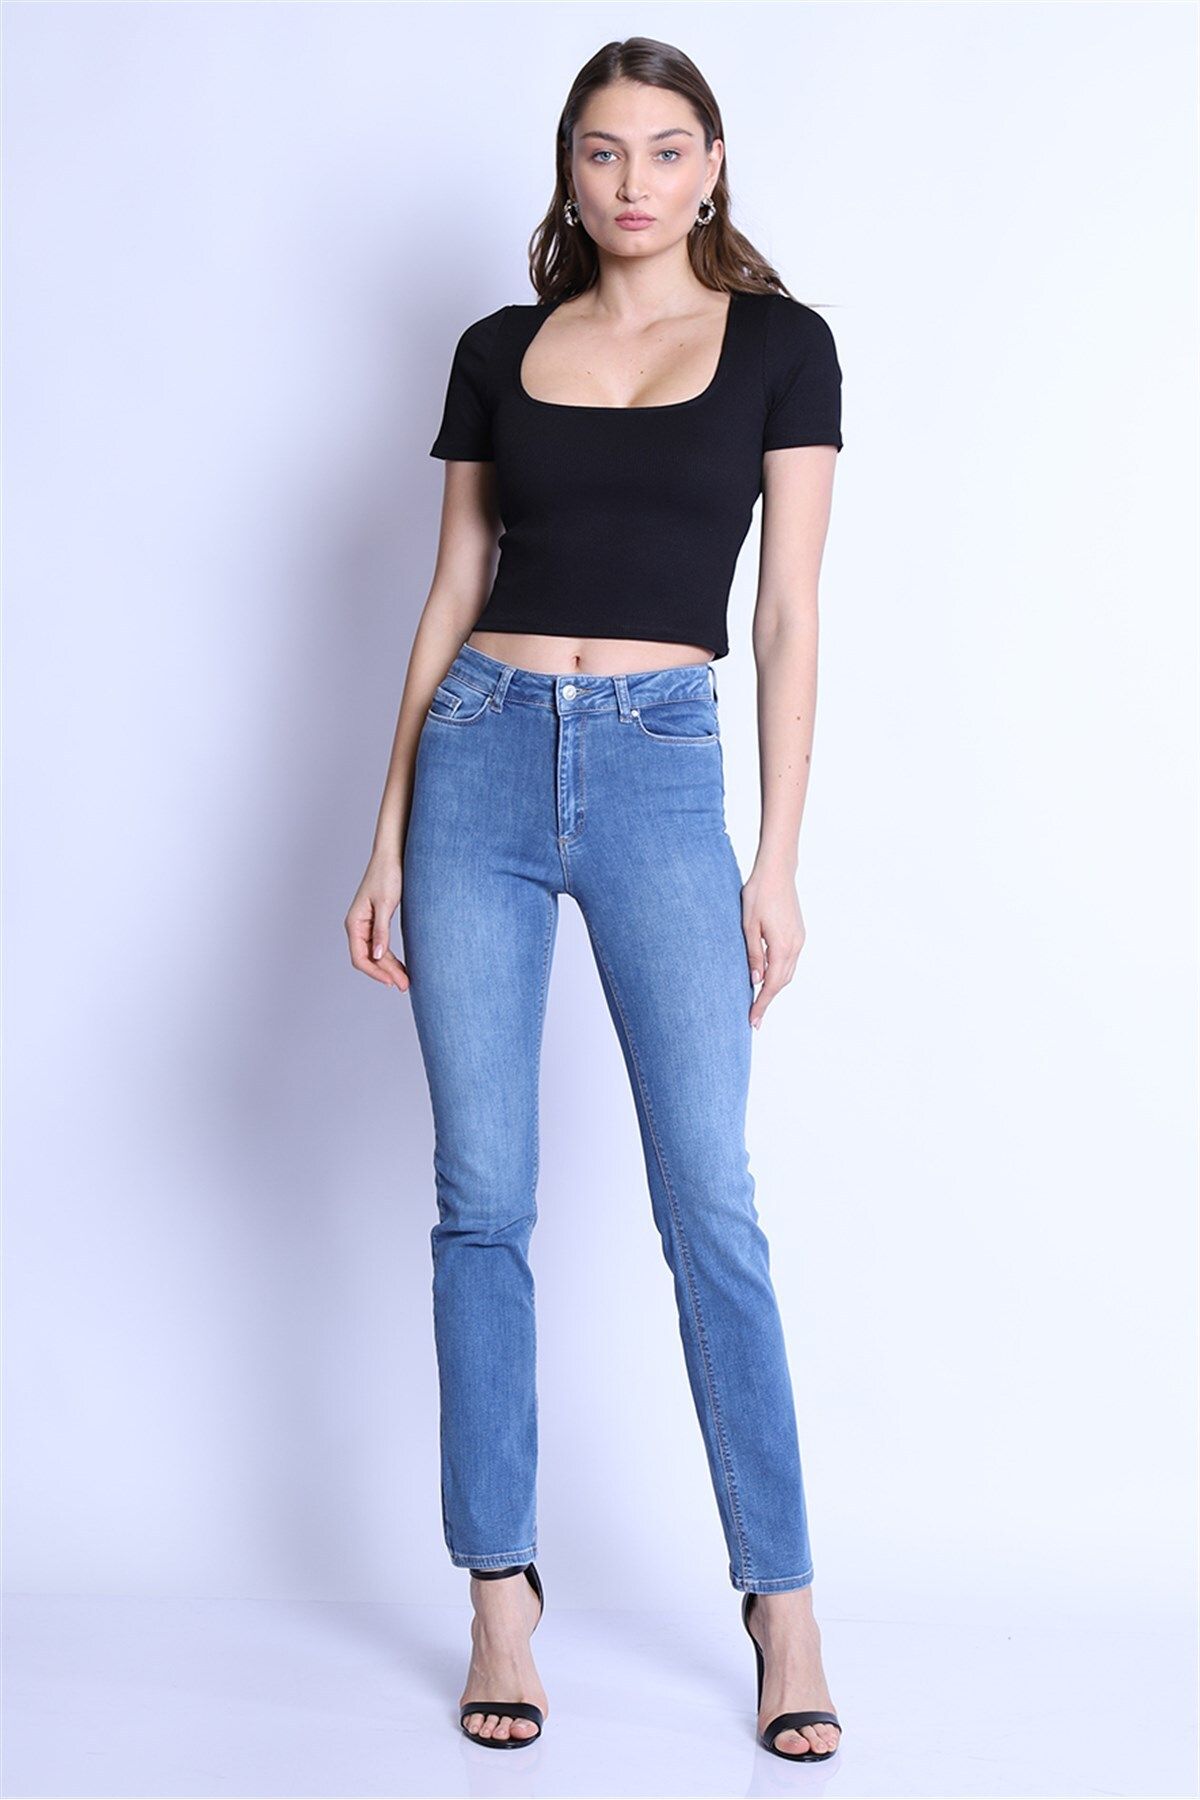 Twister Jeans Kadın Pantolon Marta 9269-04 A.mavı